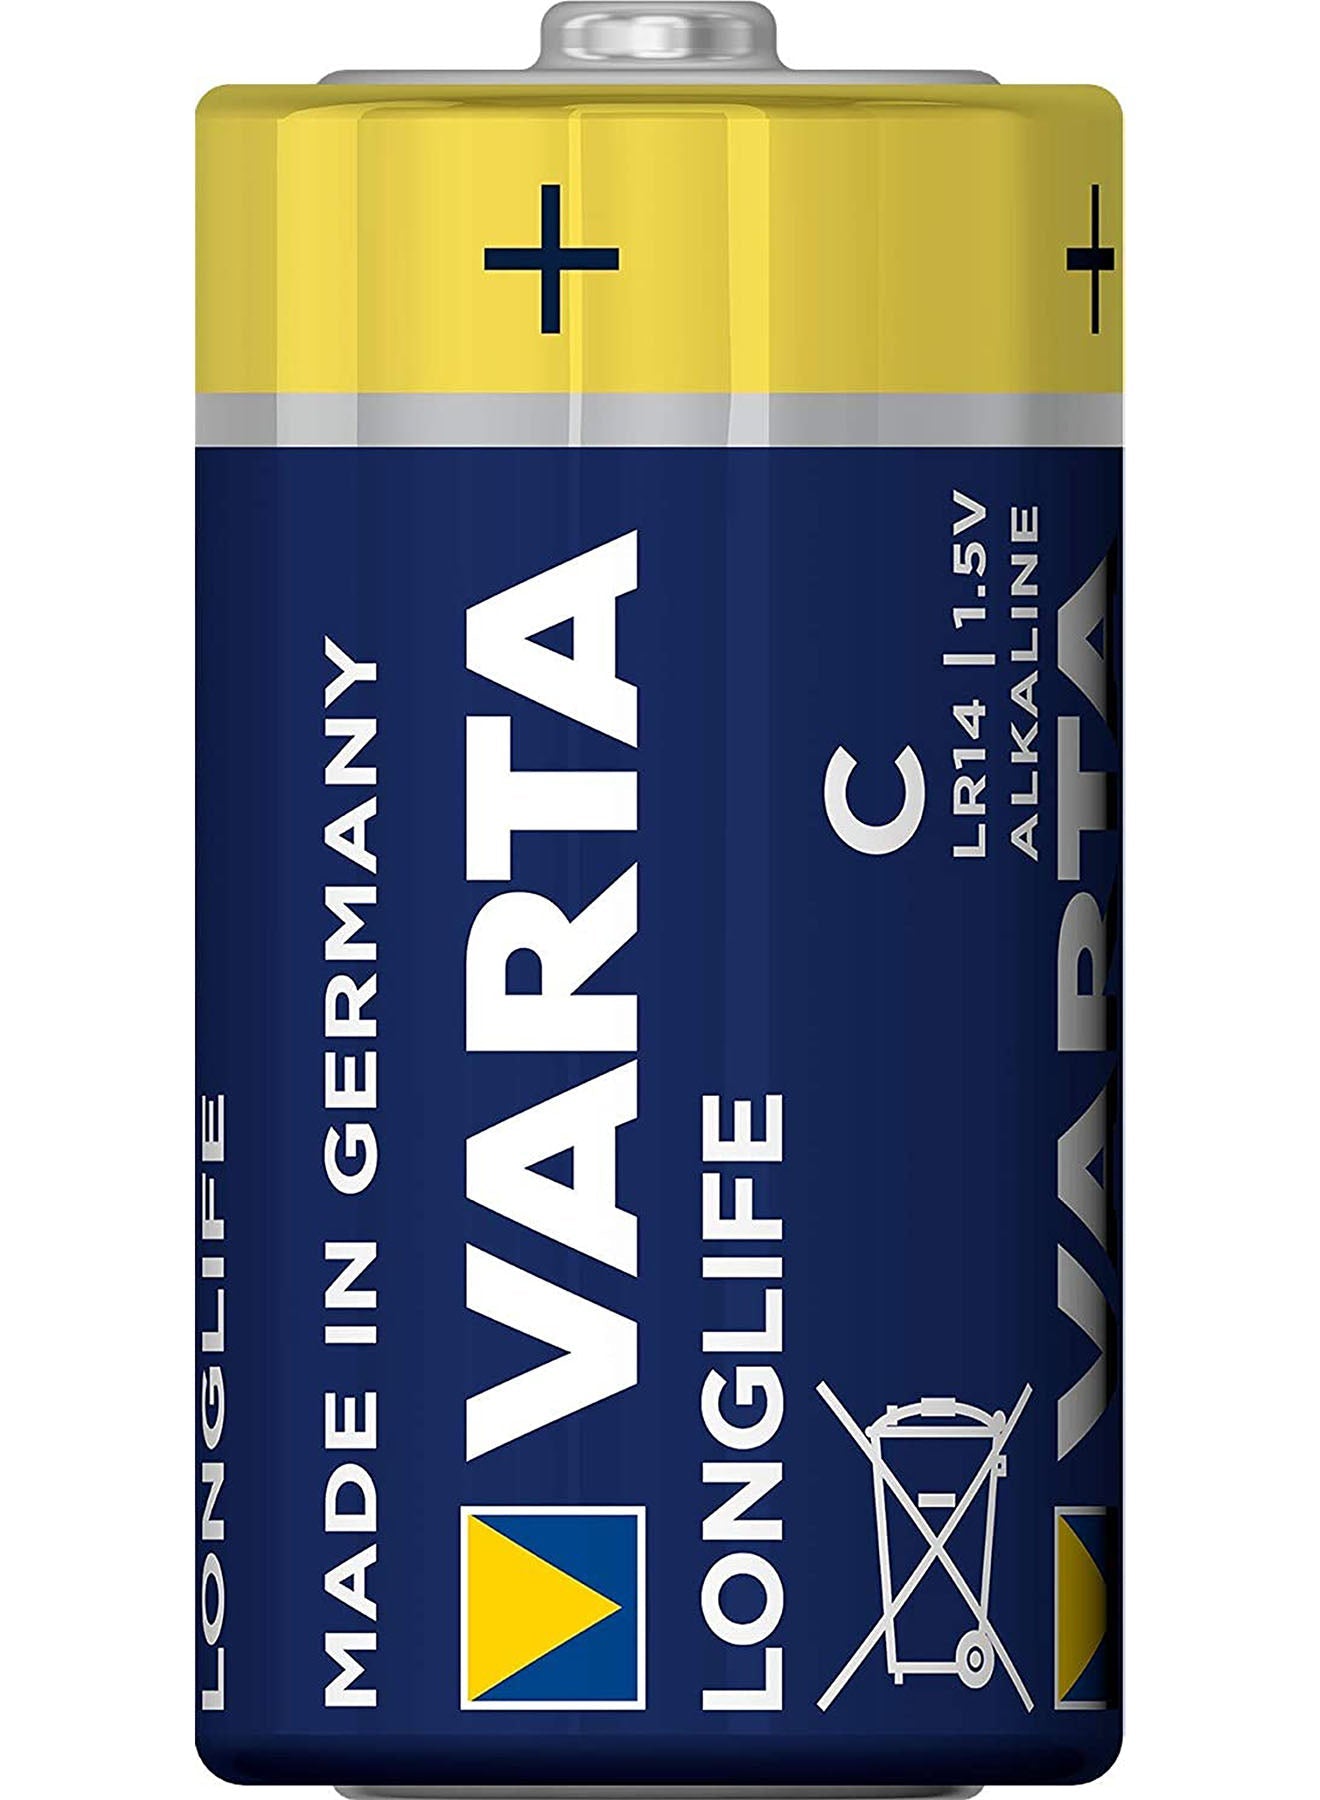 Varta Long Life C Battery 2 units Value Pack of 3 